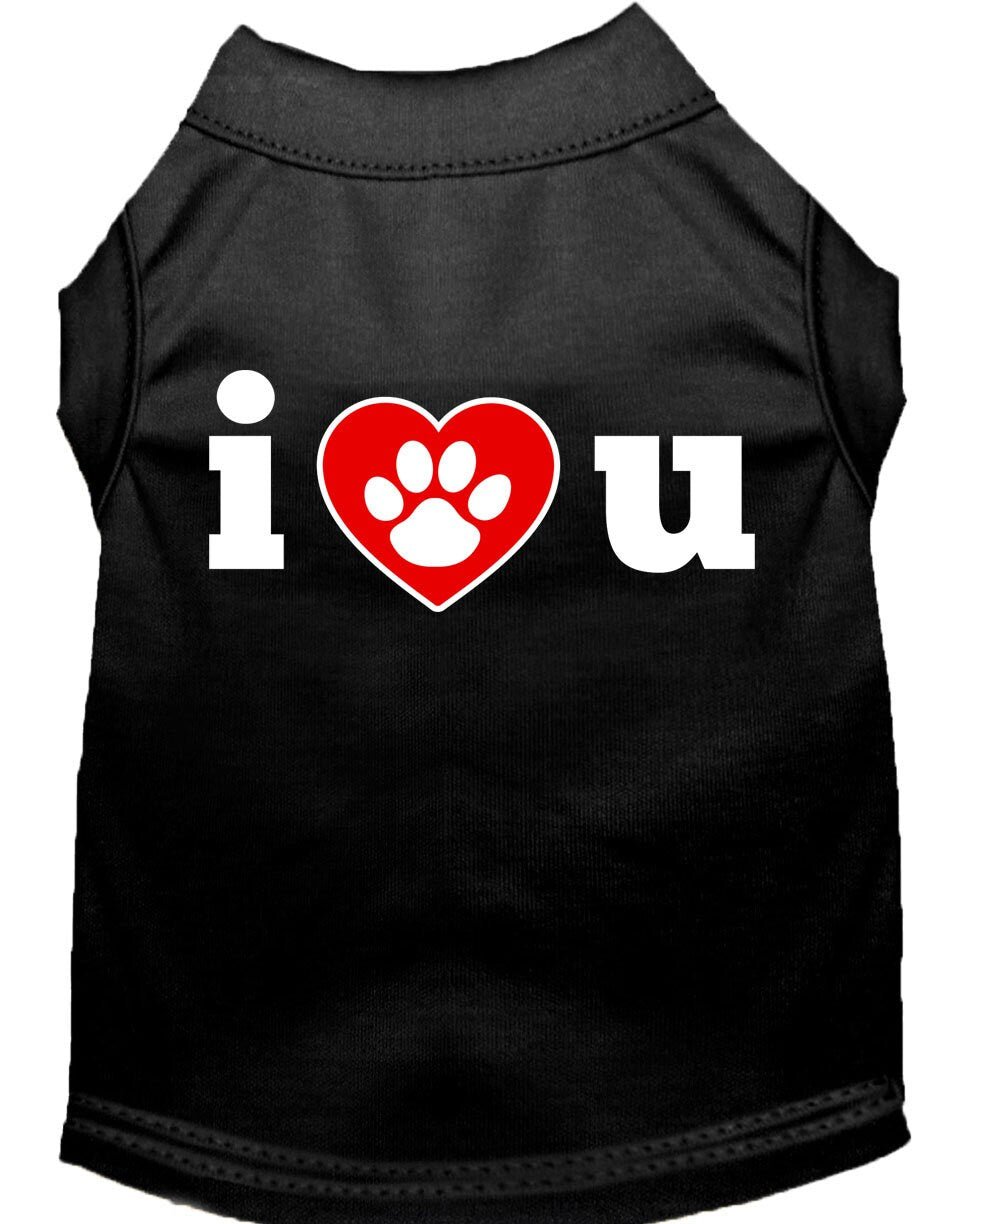 Pet Dog & Cat Shirt Screen Printed, "I Love You"